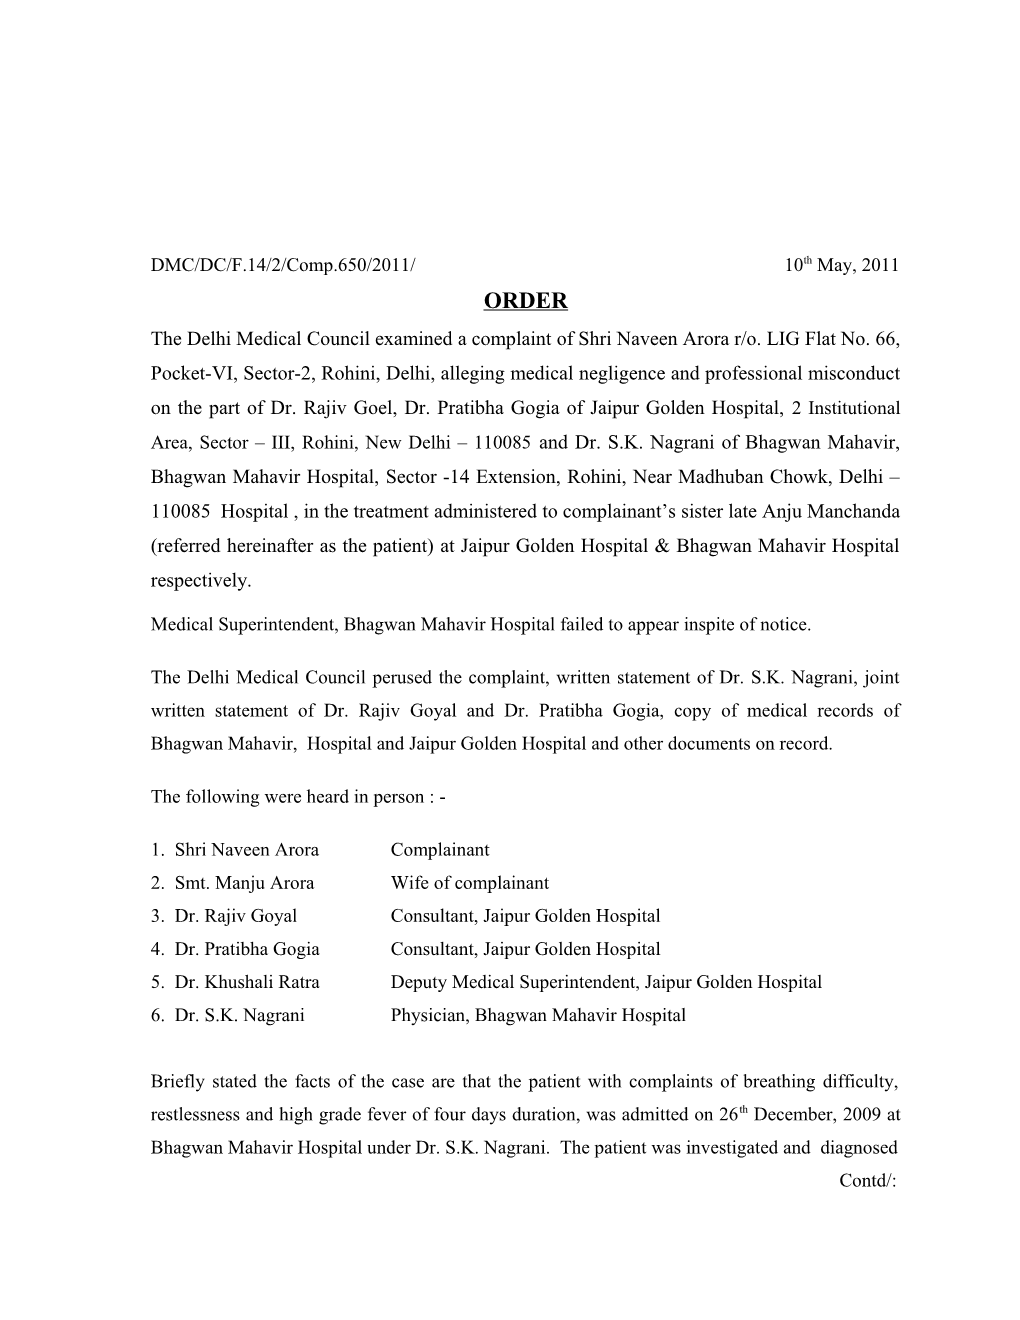 Medical Superintendent, Bhagwanmahavirhospital Failed to Appear Inspite of Notice